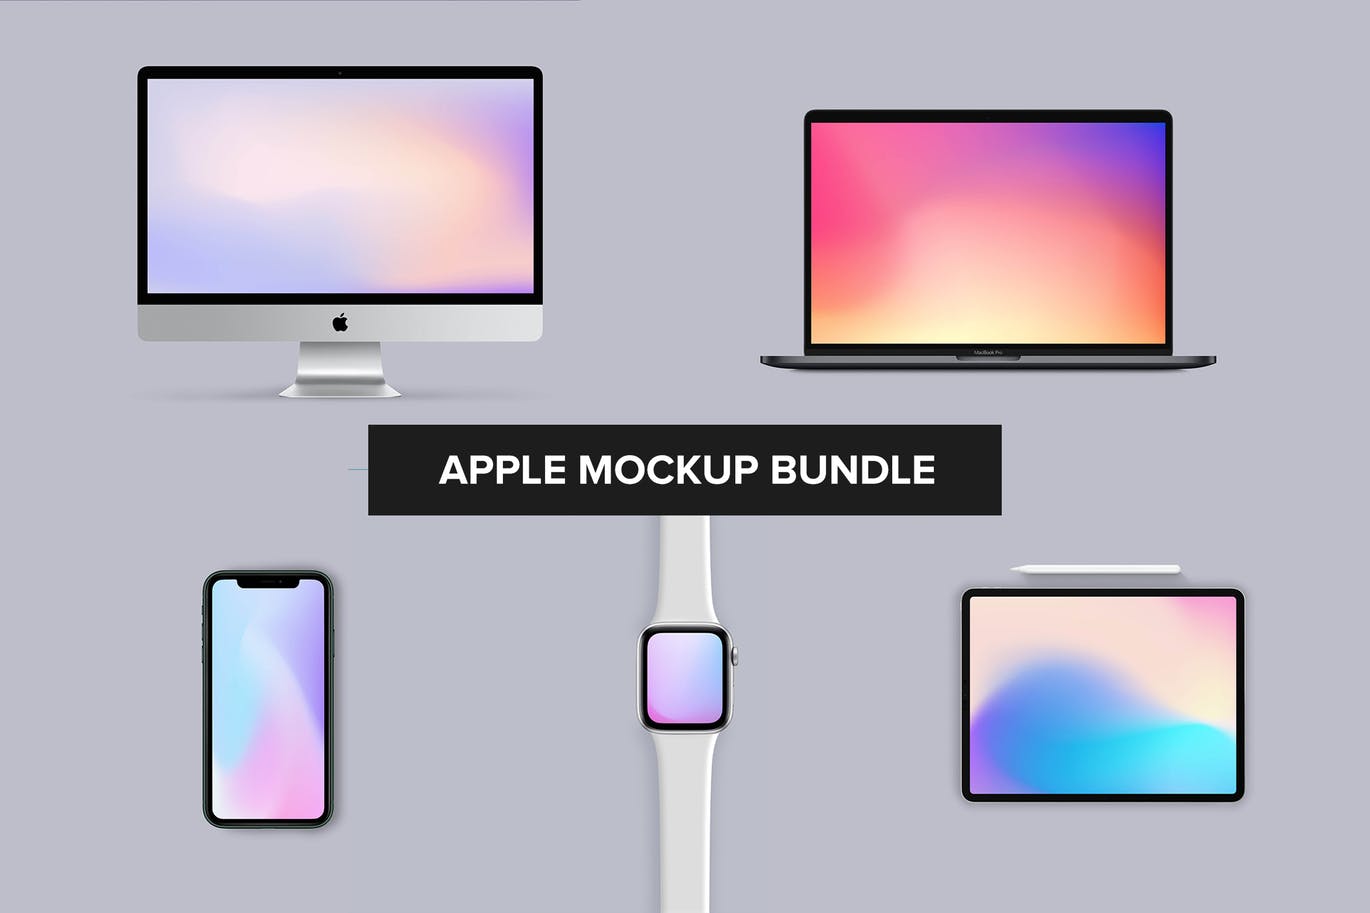 2019年Apple系列设备样机套装 Apple Mockup Bundle – iPhone, iMac, Watch, iPad插图